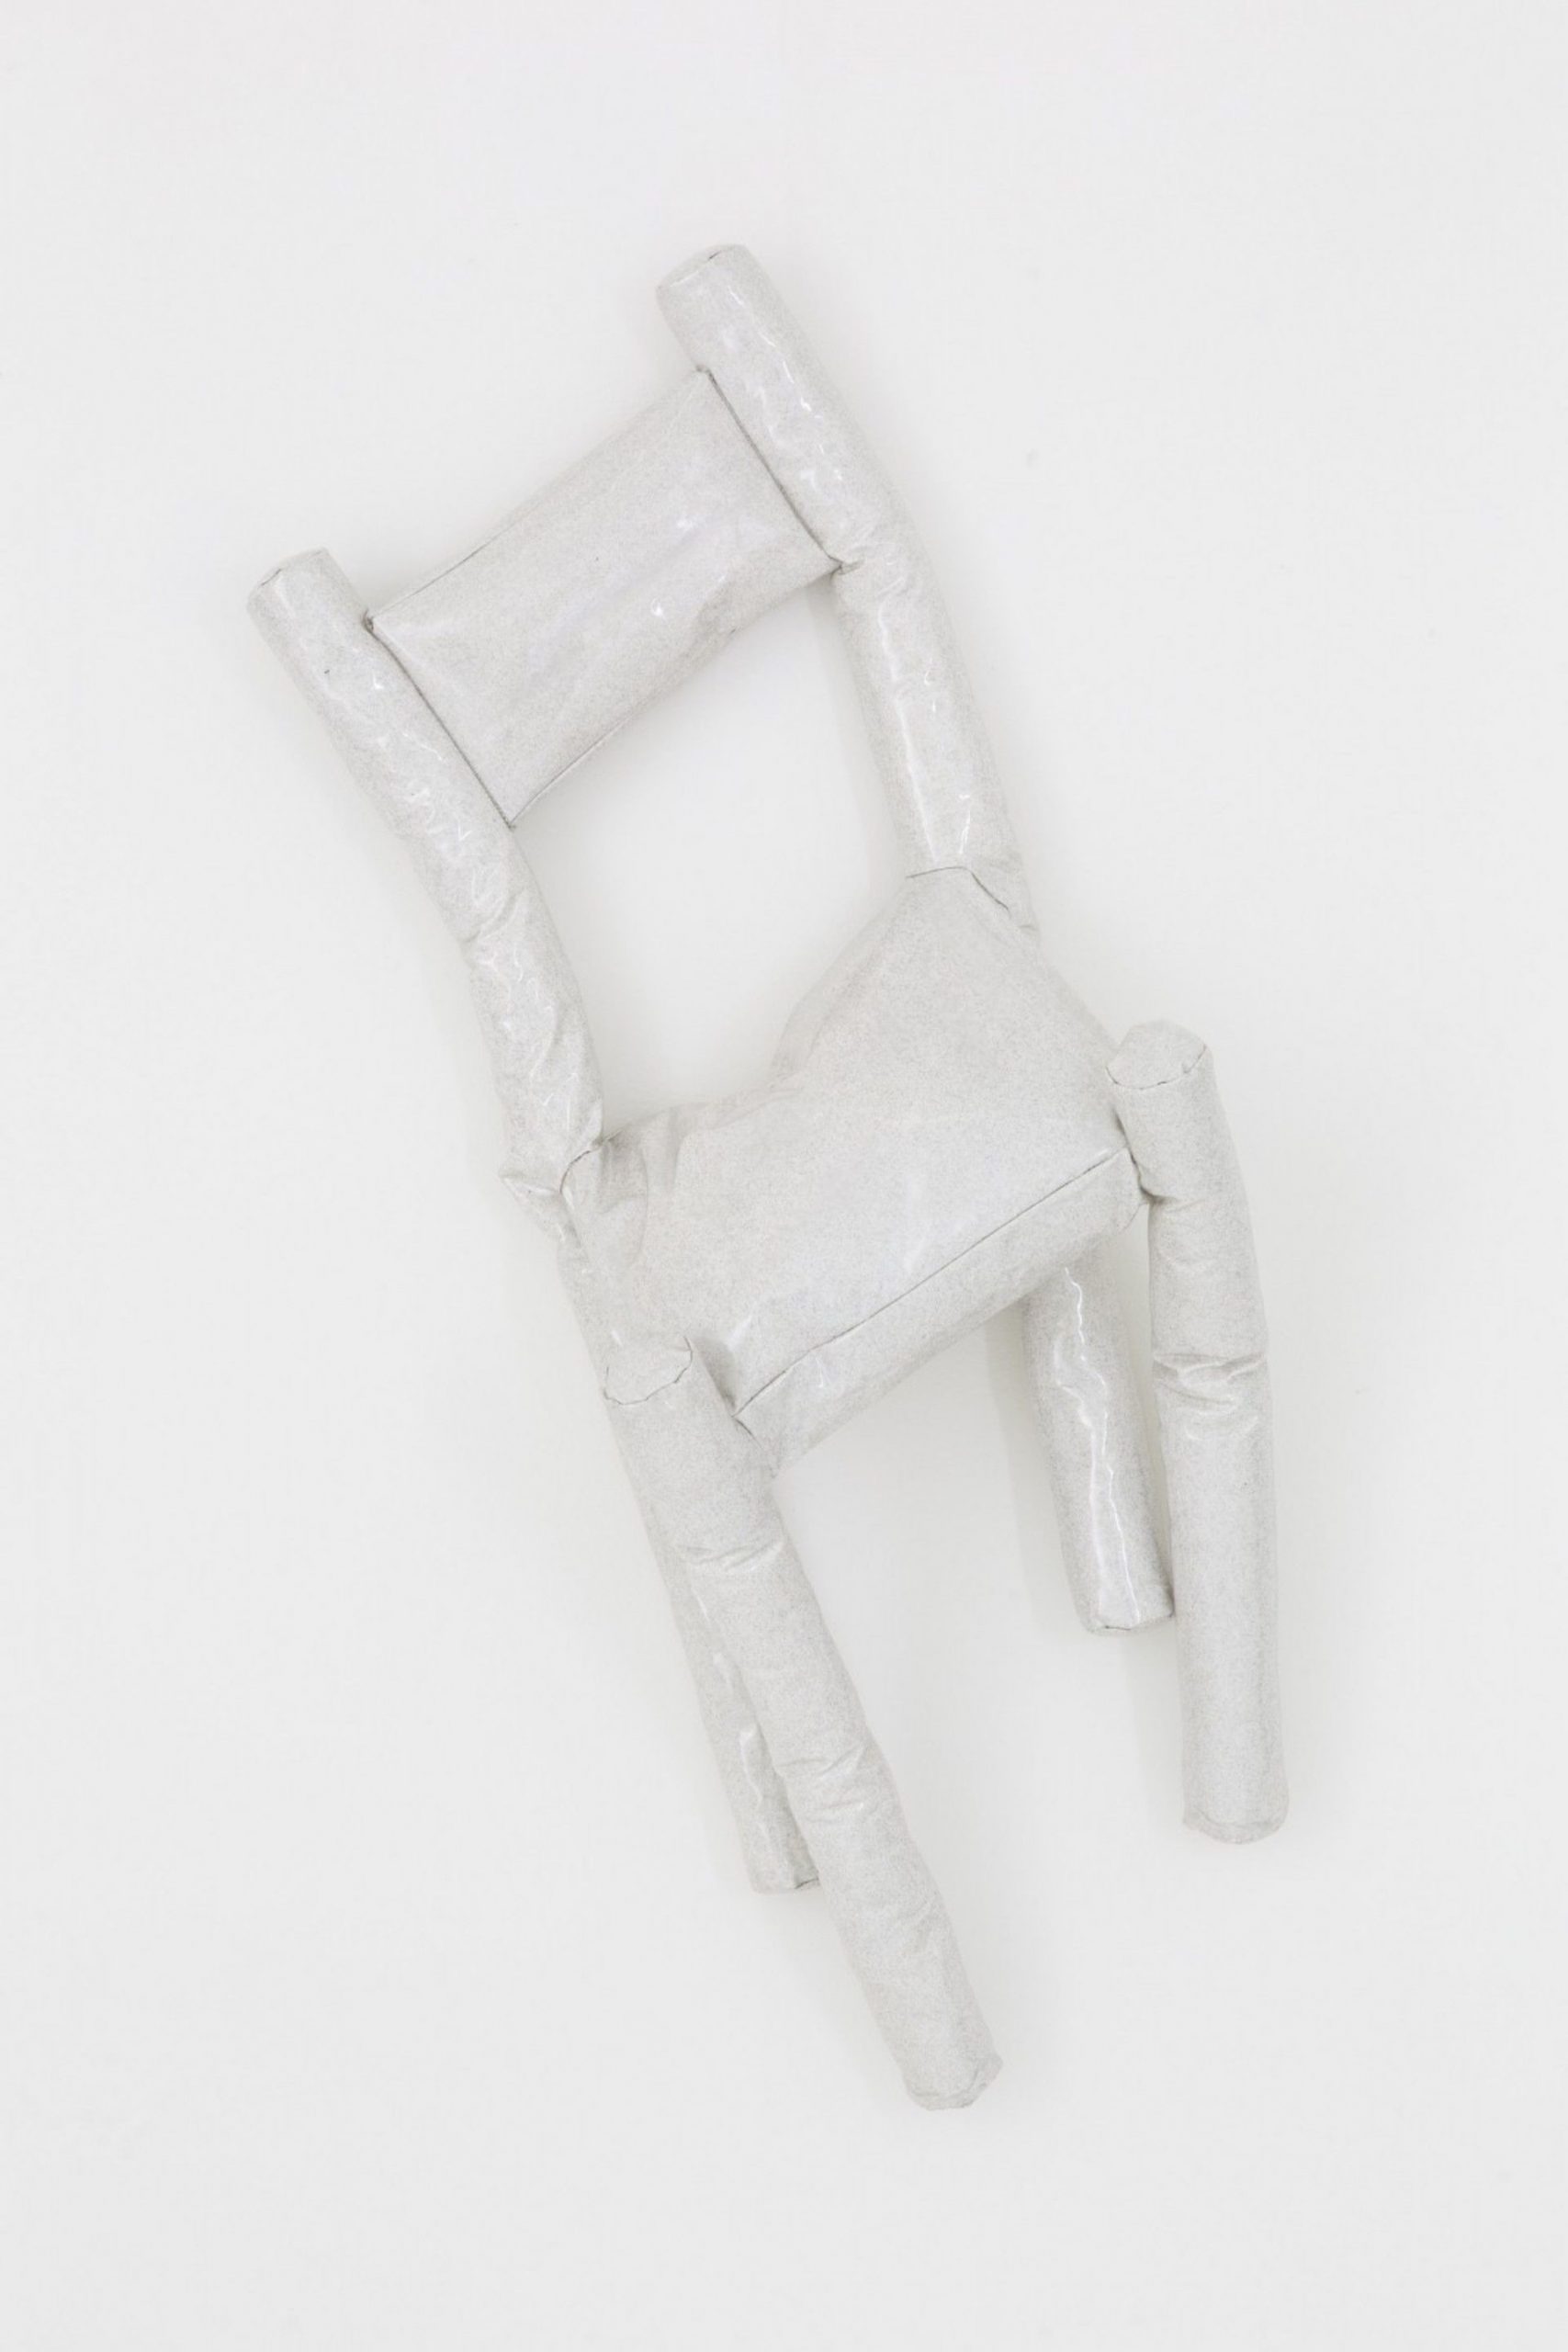 Katie Stout sculpture, Sad Chair 3, installed at Gallery Diet, Miami 2015.